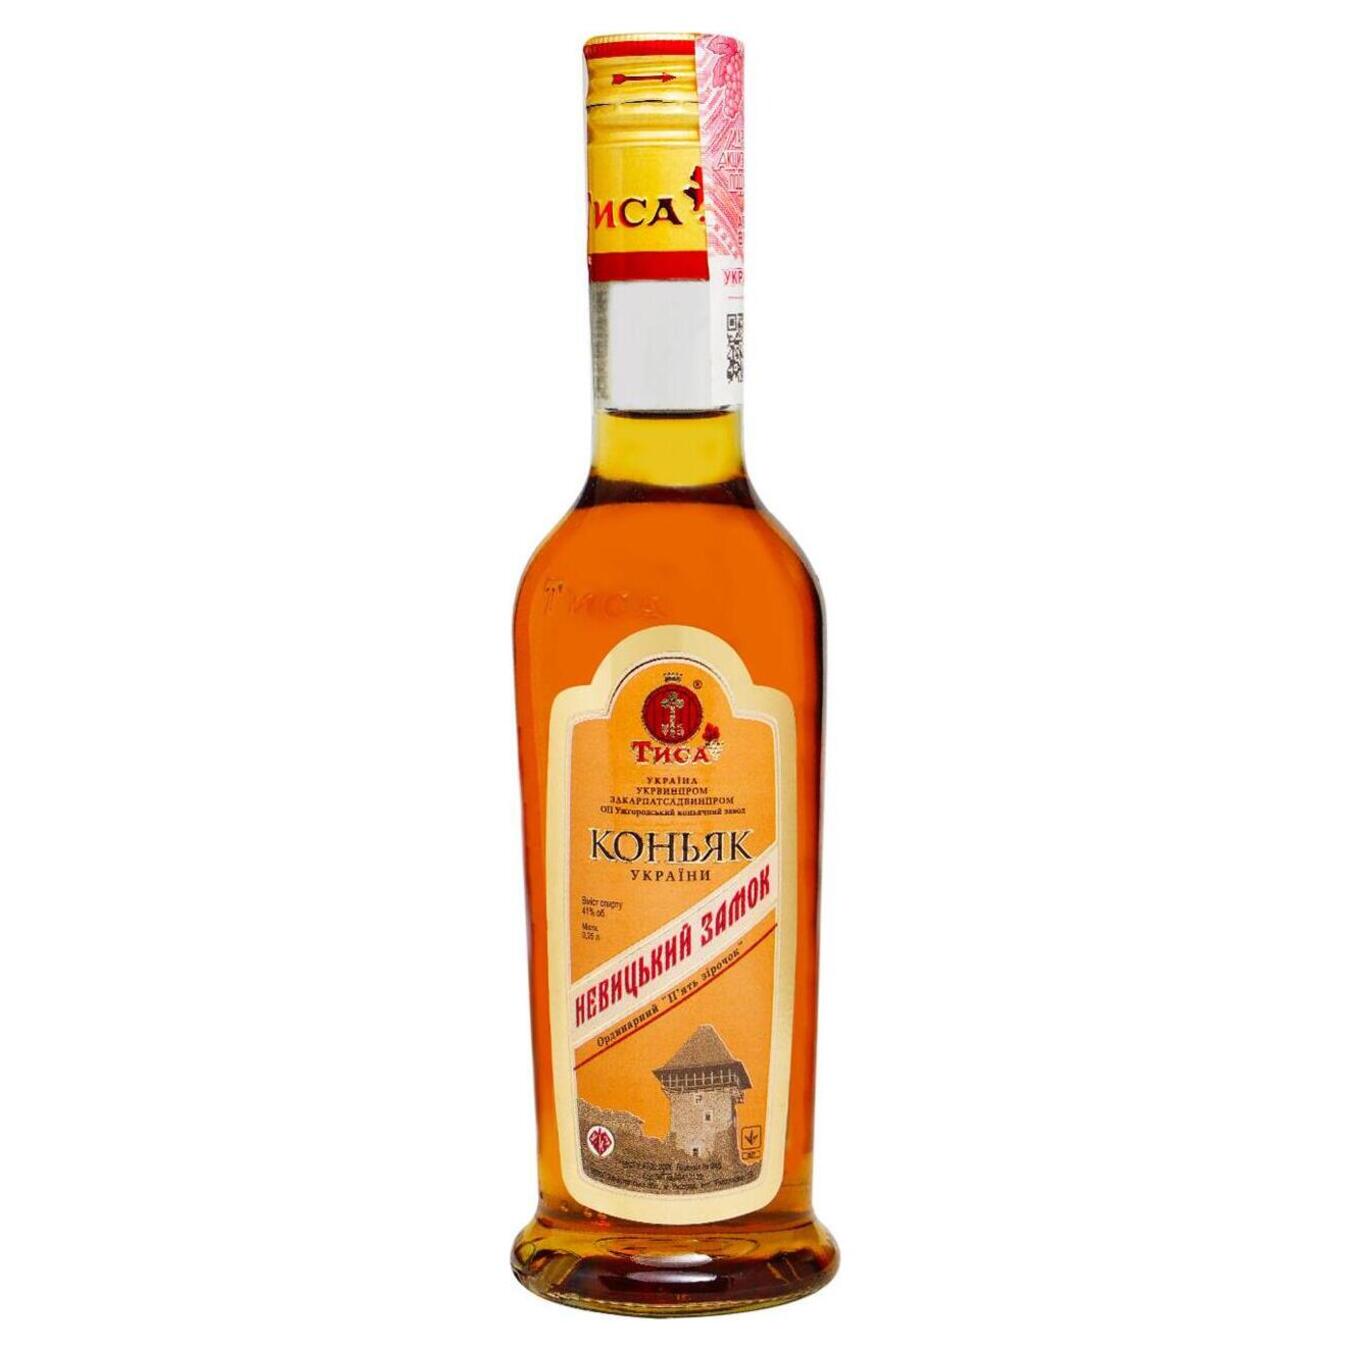 Cognac UKZ Nevytskyi Zamok 41% 0.25l